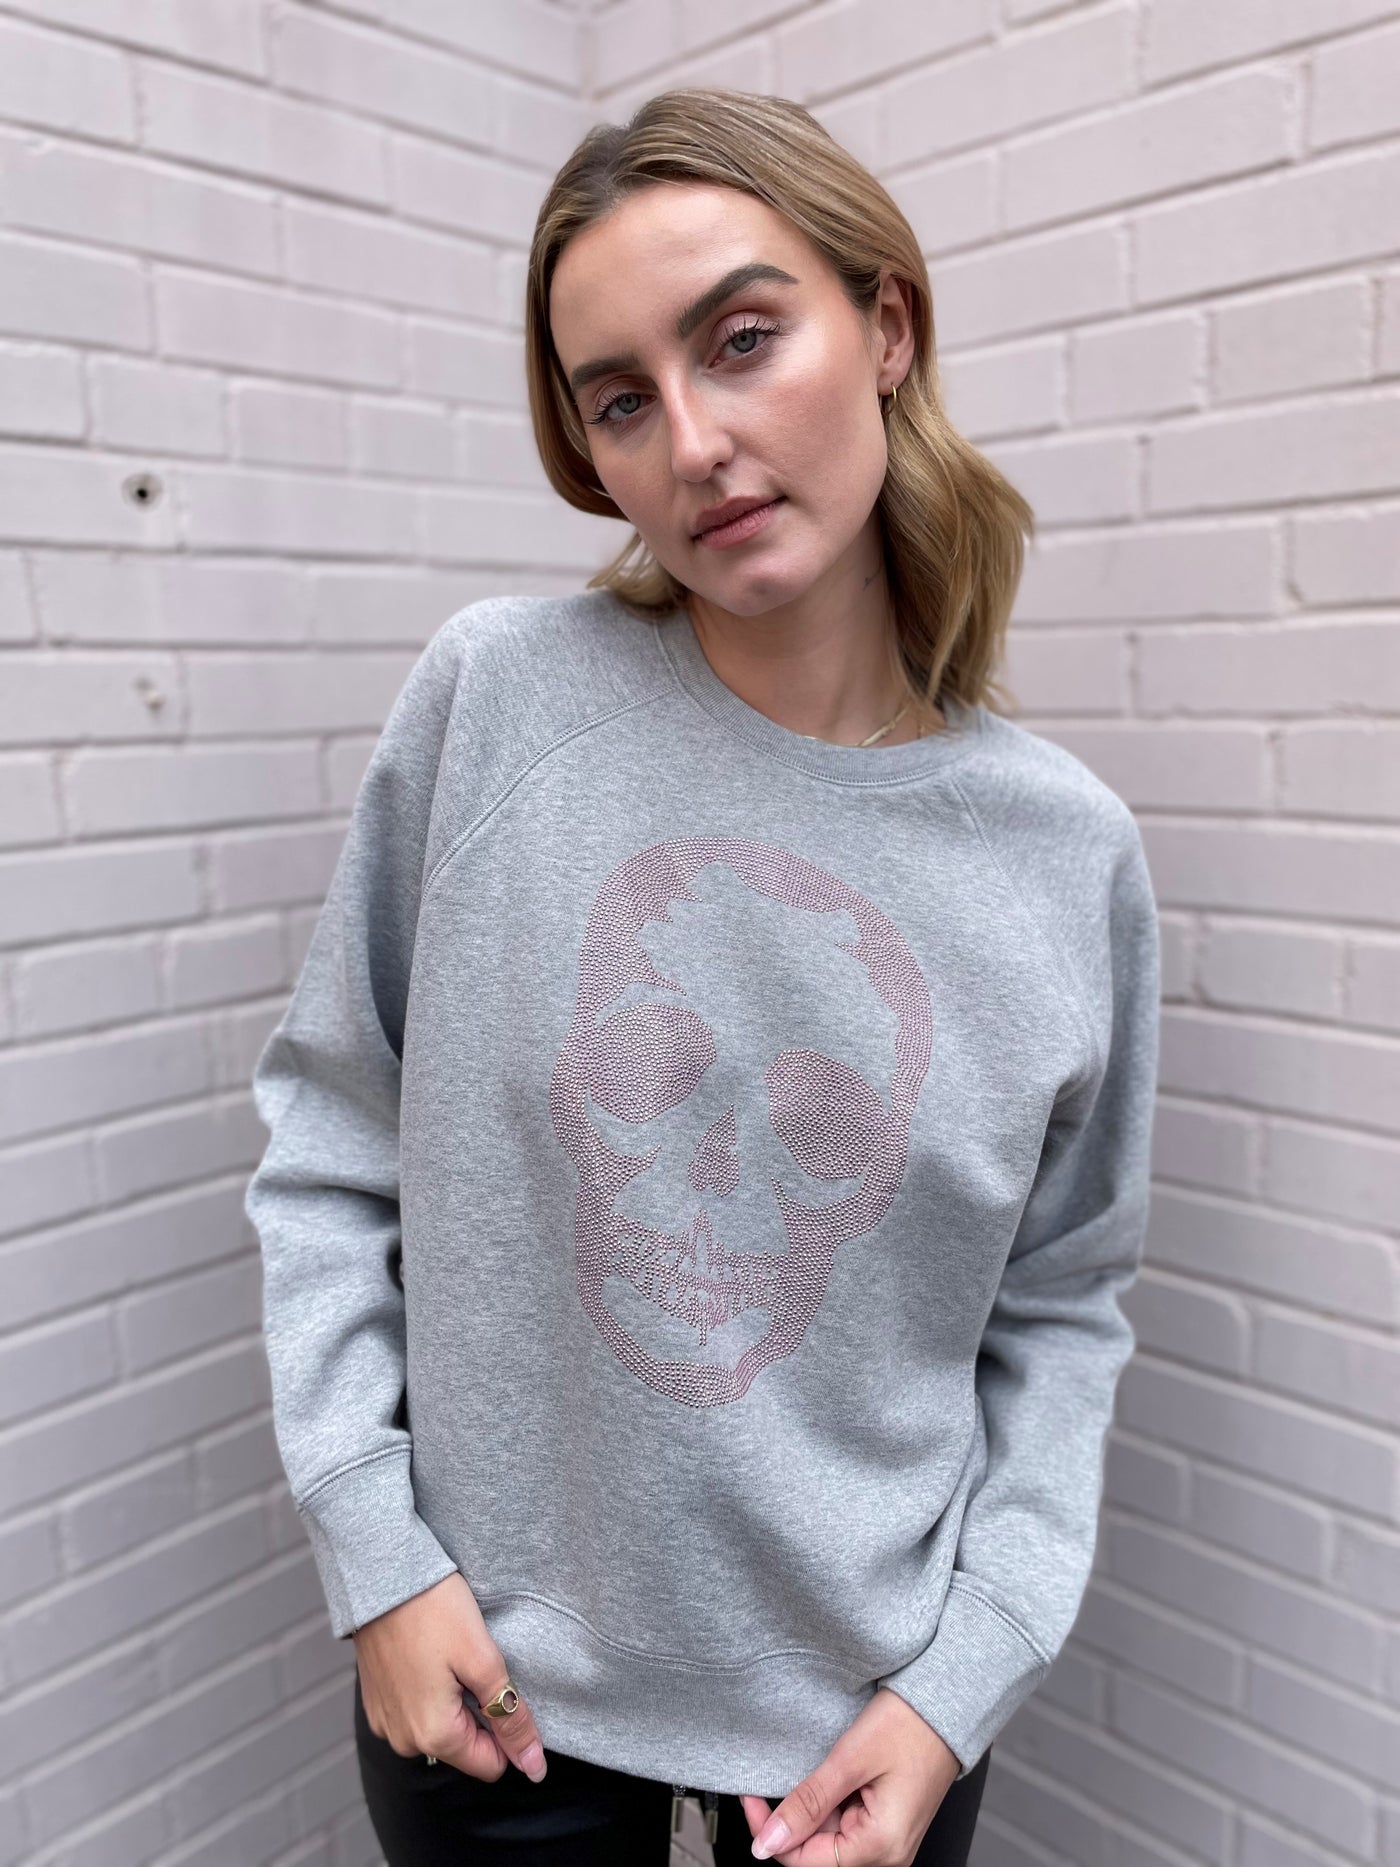 Zadig & Voltaire Skull Strass Rhinestone Sweatshirt - Grey